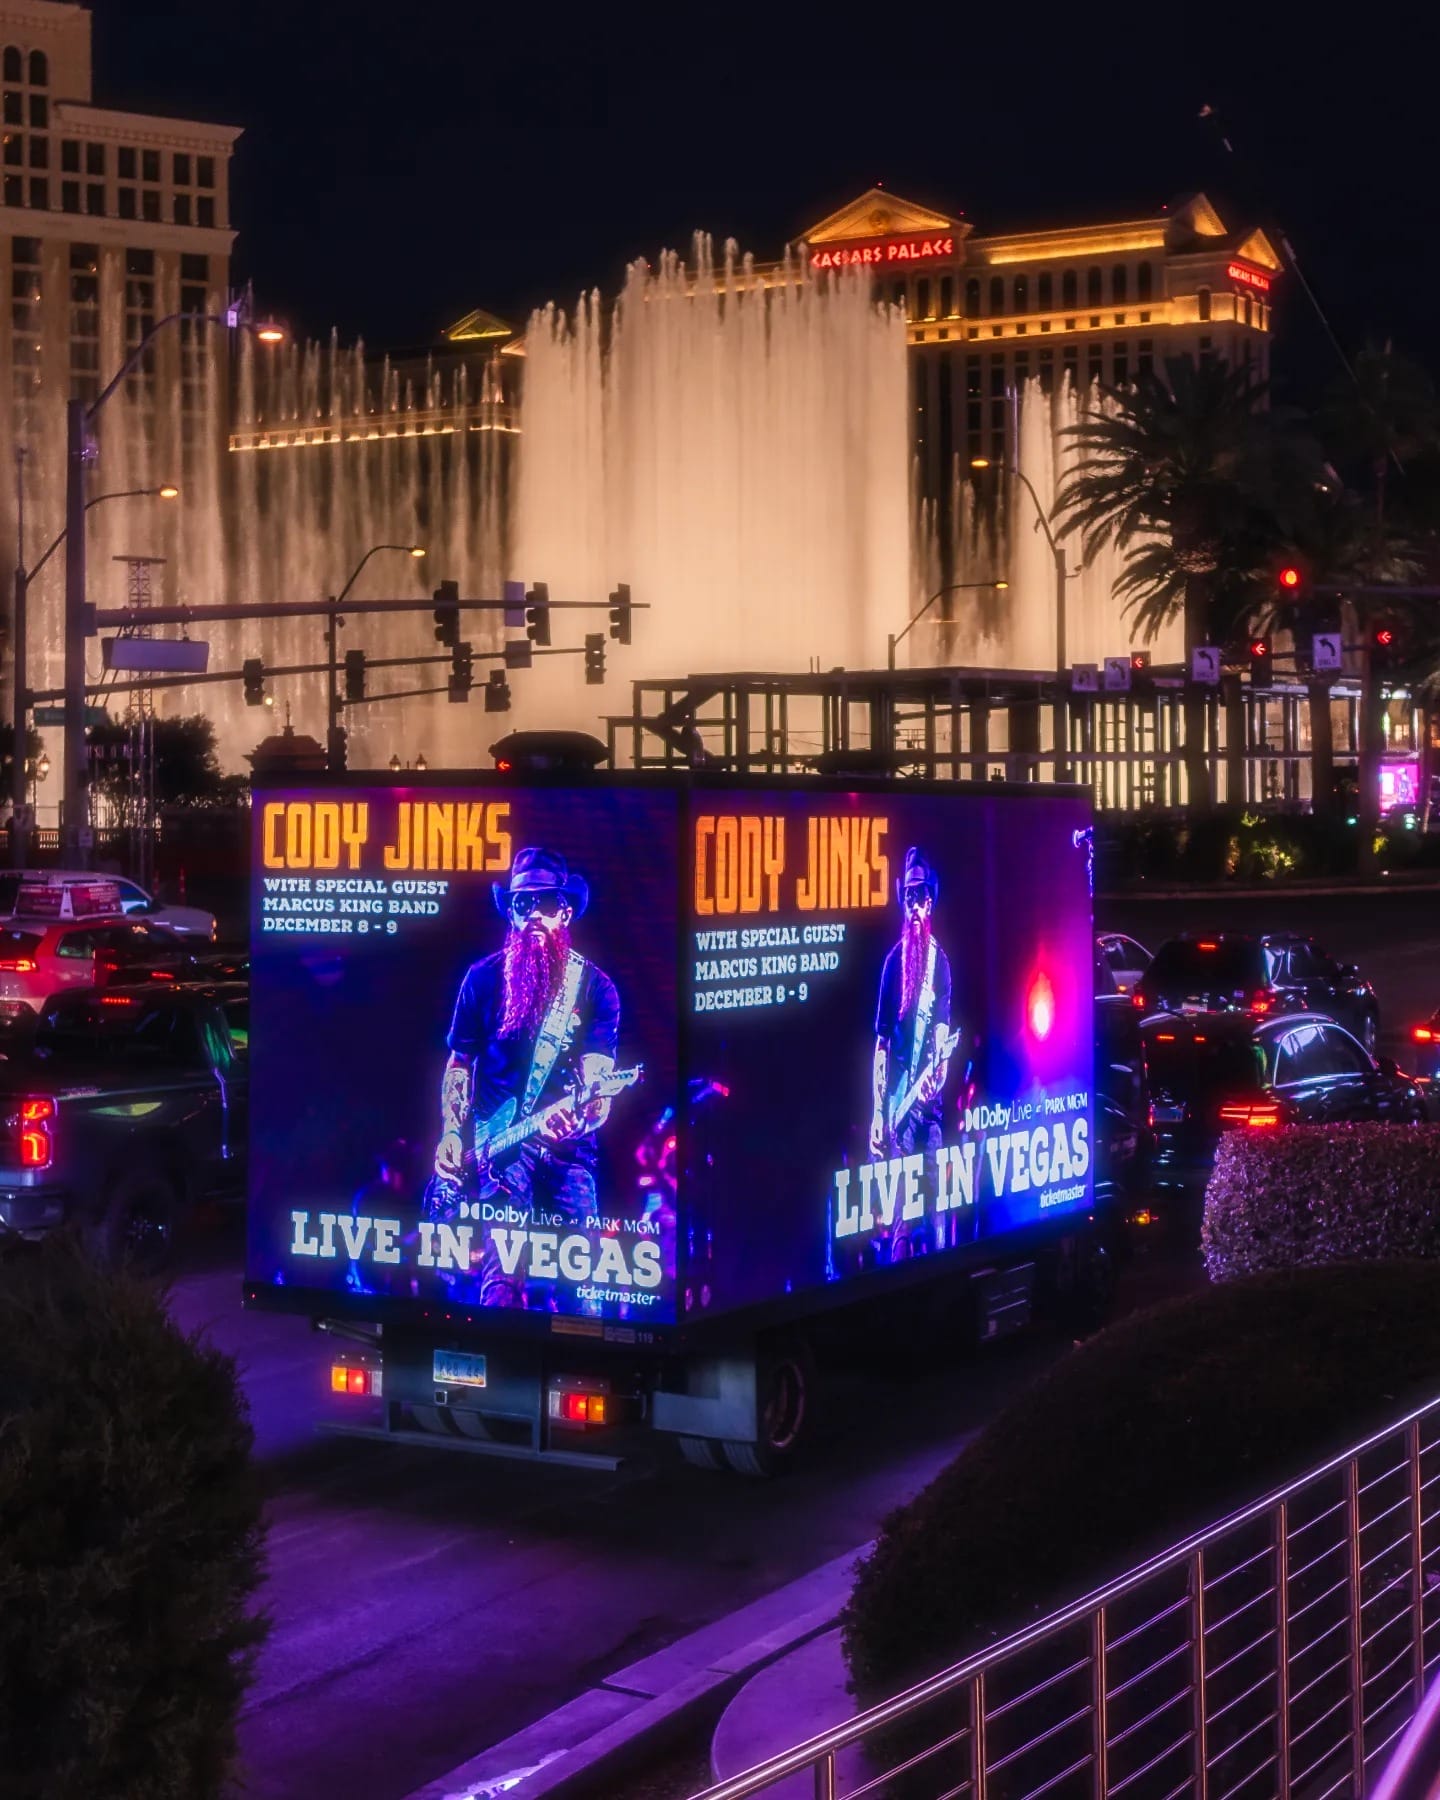 Advertisement truck for Cody Jinks concert, Las Vegas.